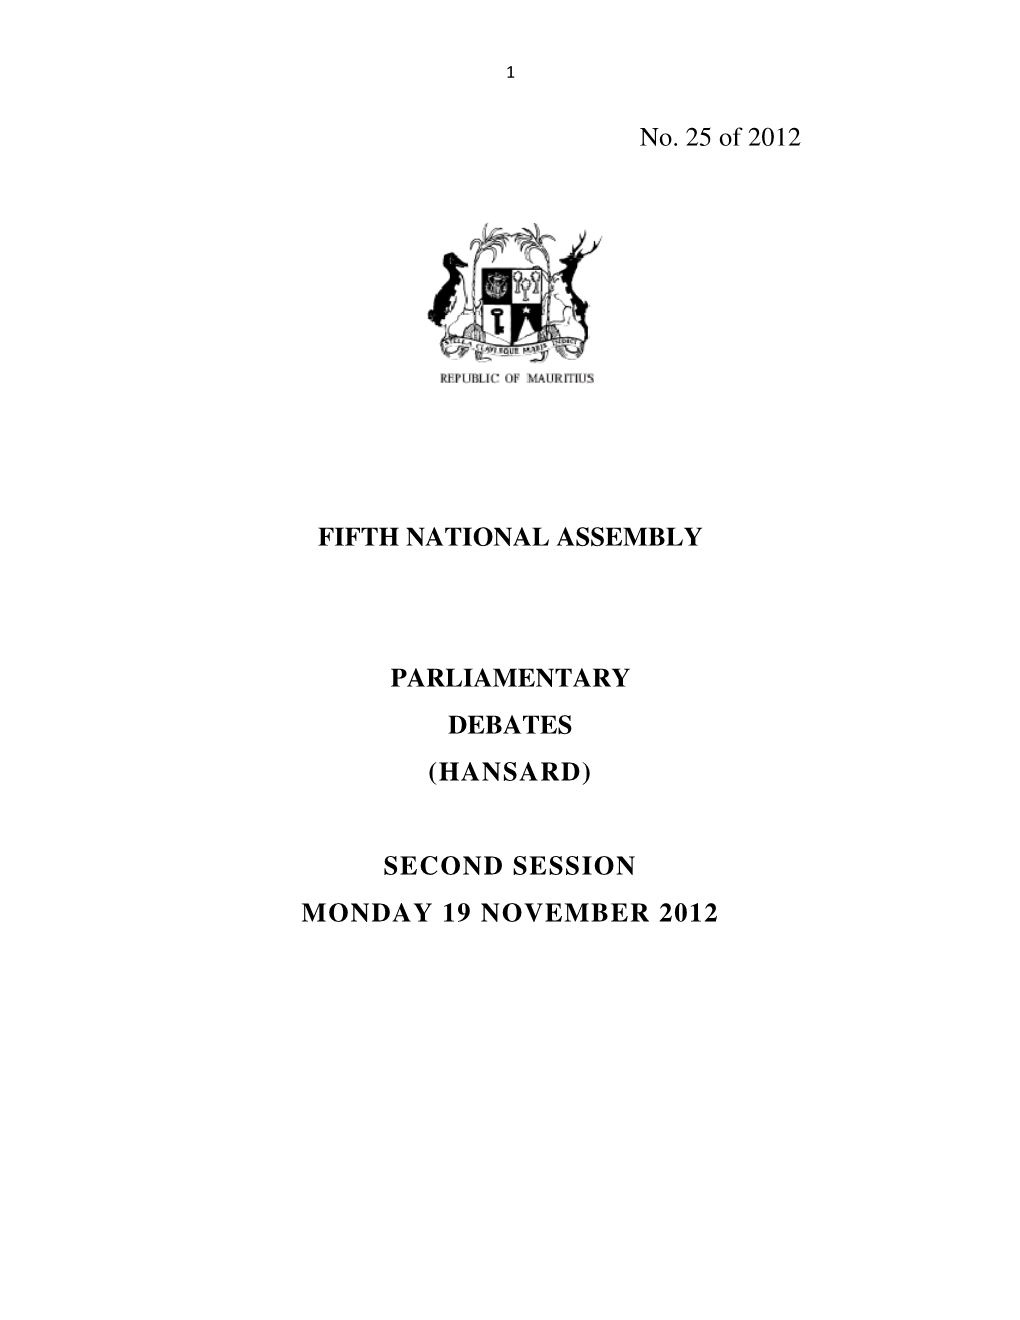 (Hansard) Second Session Monday 19 November 2012